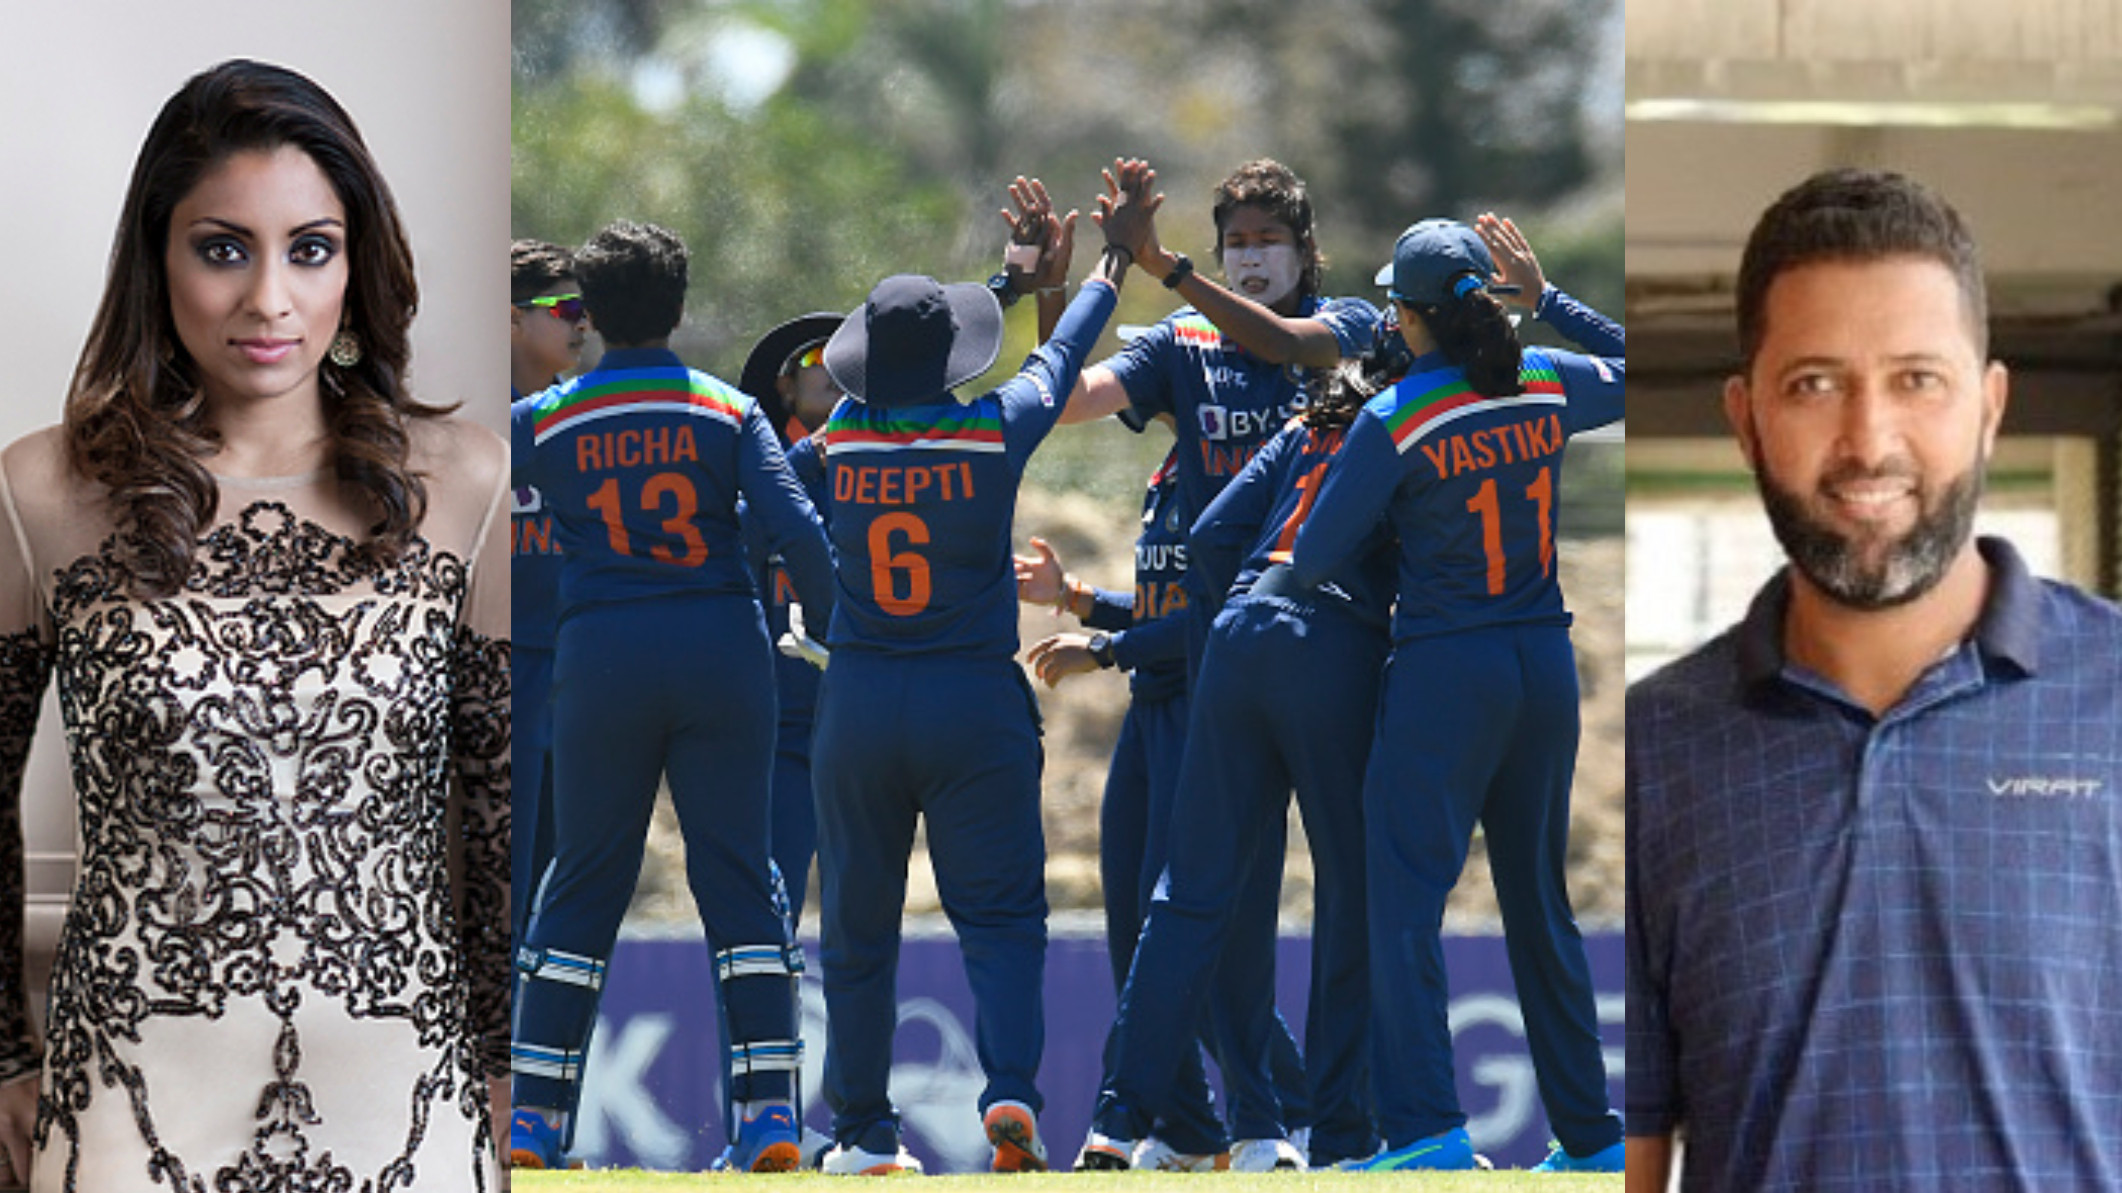 AUSW v INDW 2021: Cricket fraternity rejoices as India women snap Australia's winning streak, beats them by 2 wickets